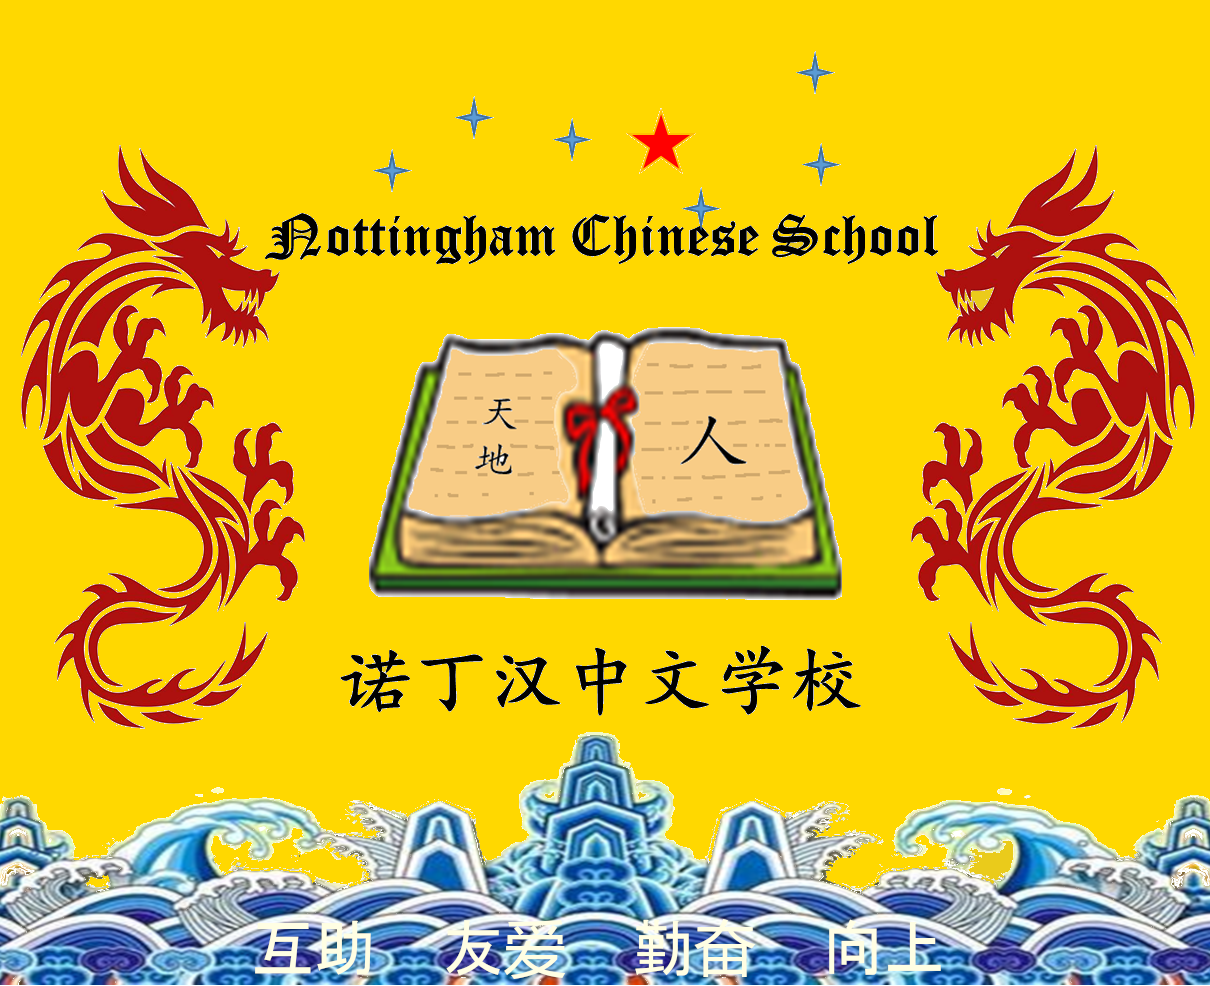 Nottingham Chinese School logo